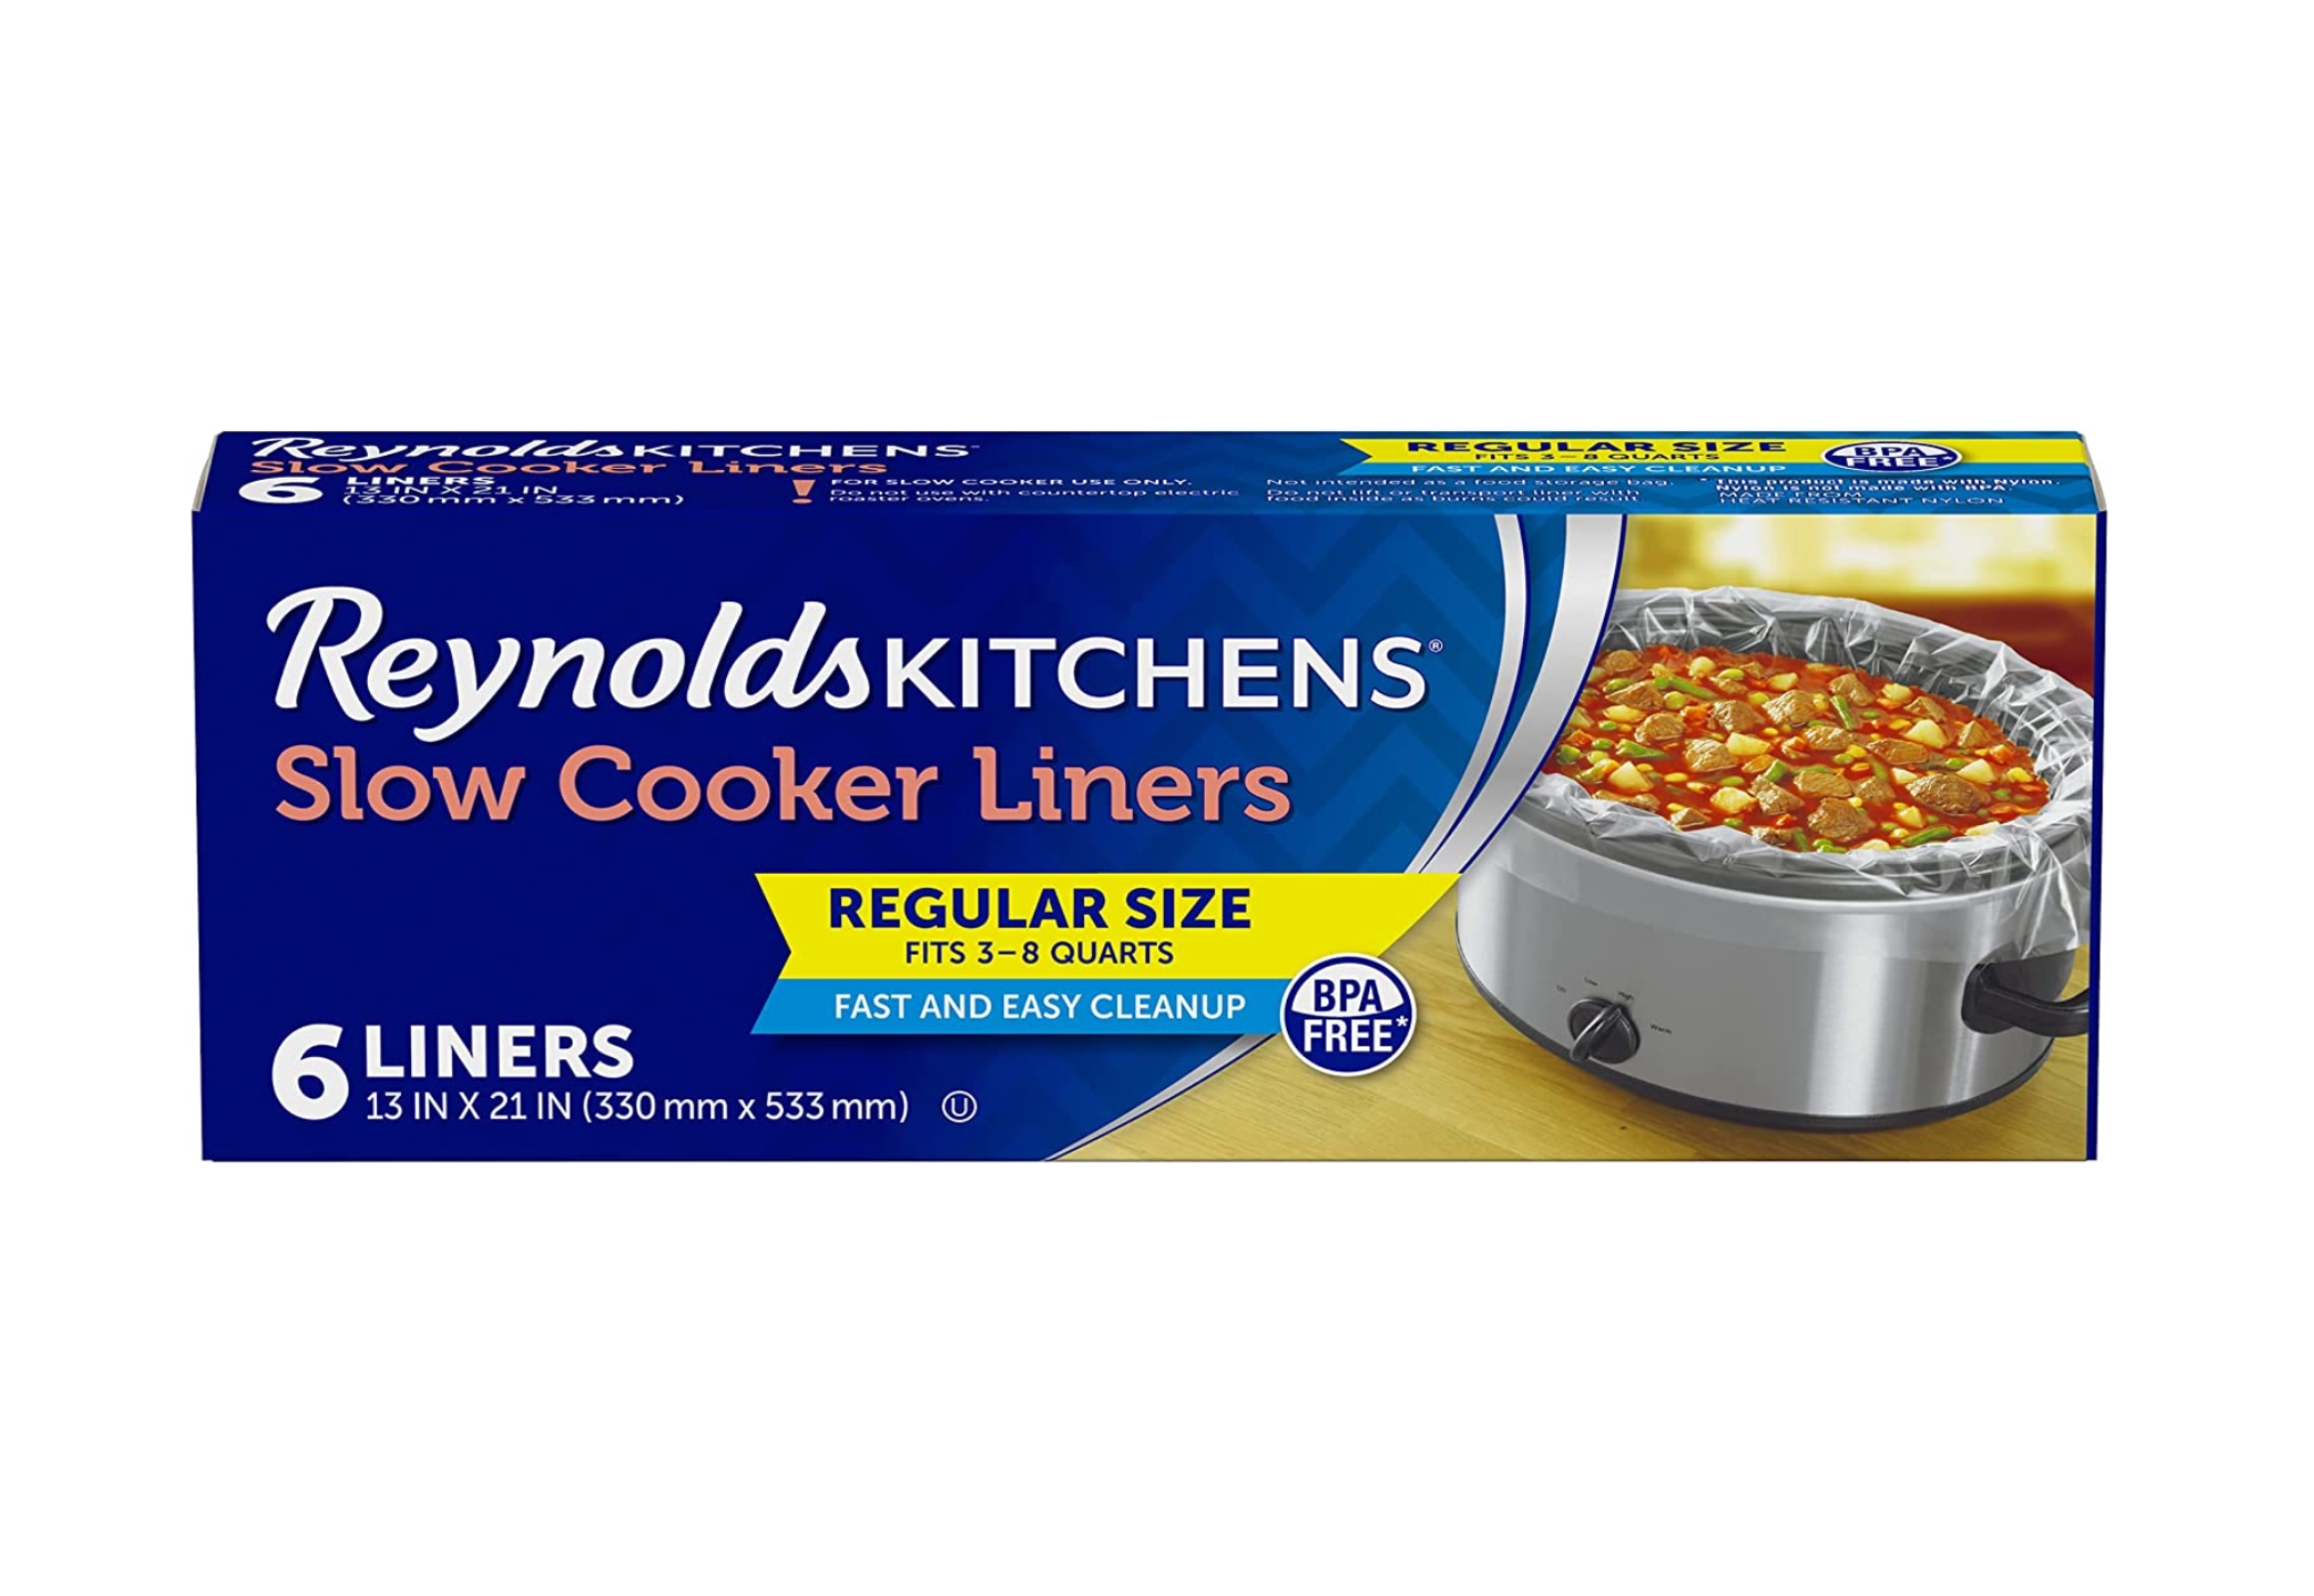 https://prod-cdn.thekrazycouponlady.com/wp-content/uploads/2023/01/amazon-reynolds-kitchens-regular-slow-cooker-liners-2023-1673529408-1673529408.jpg